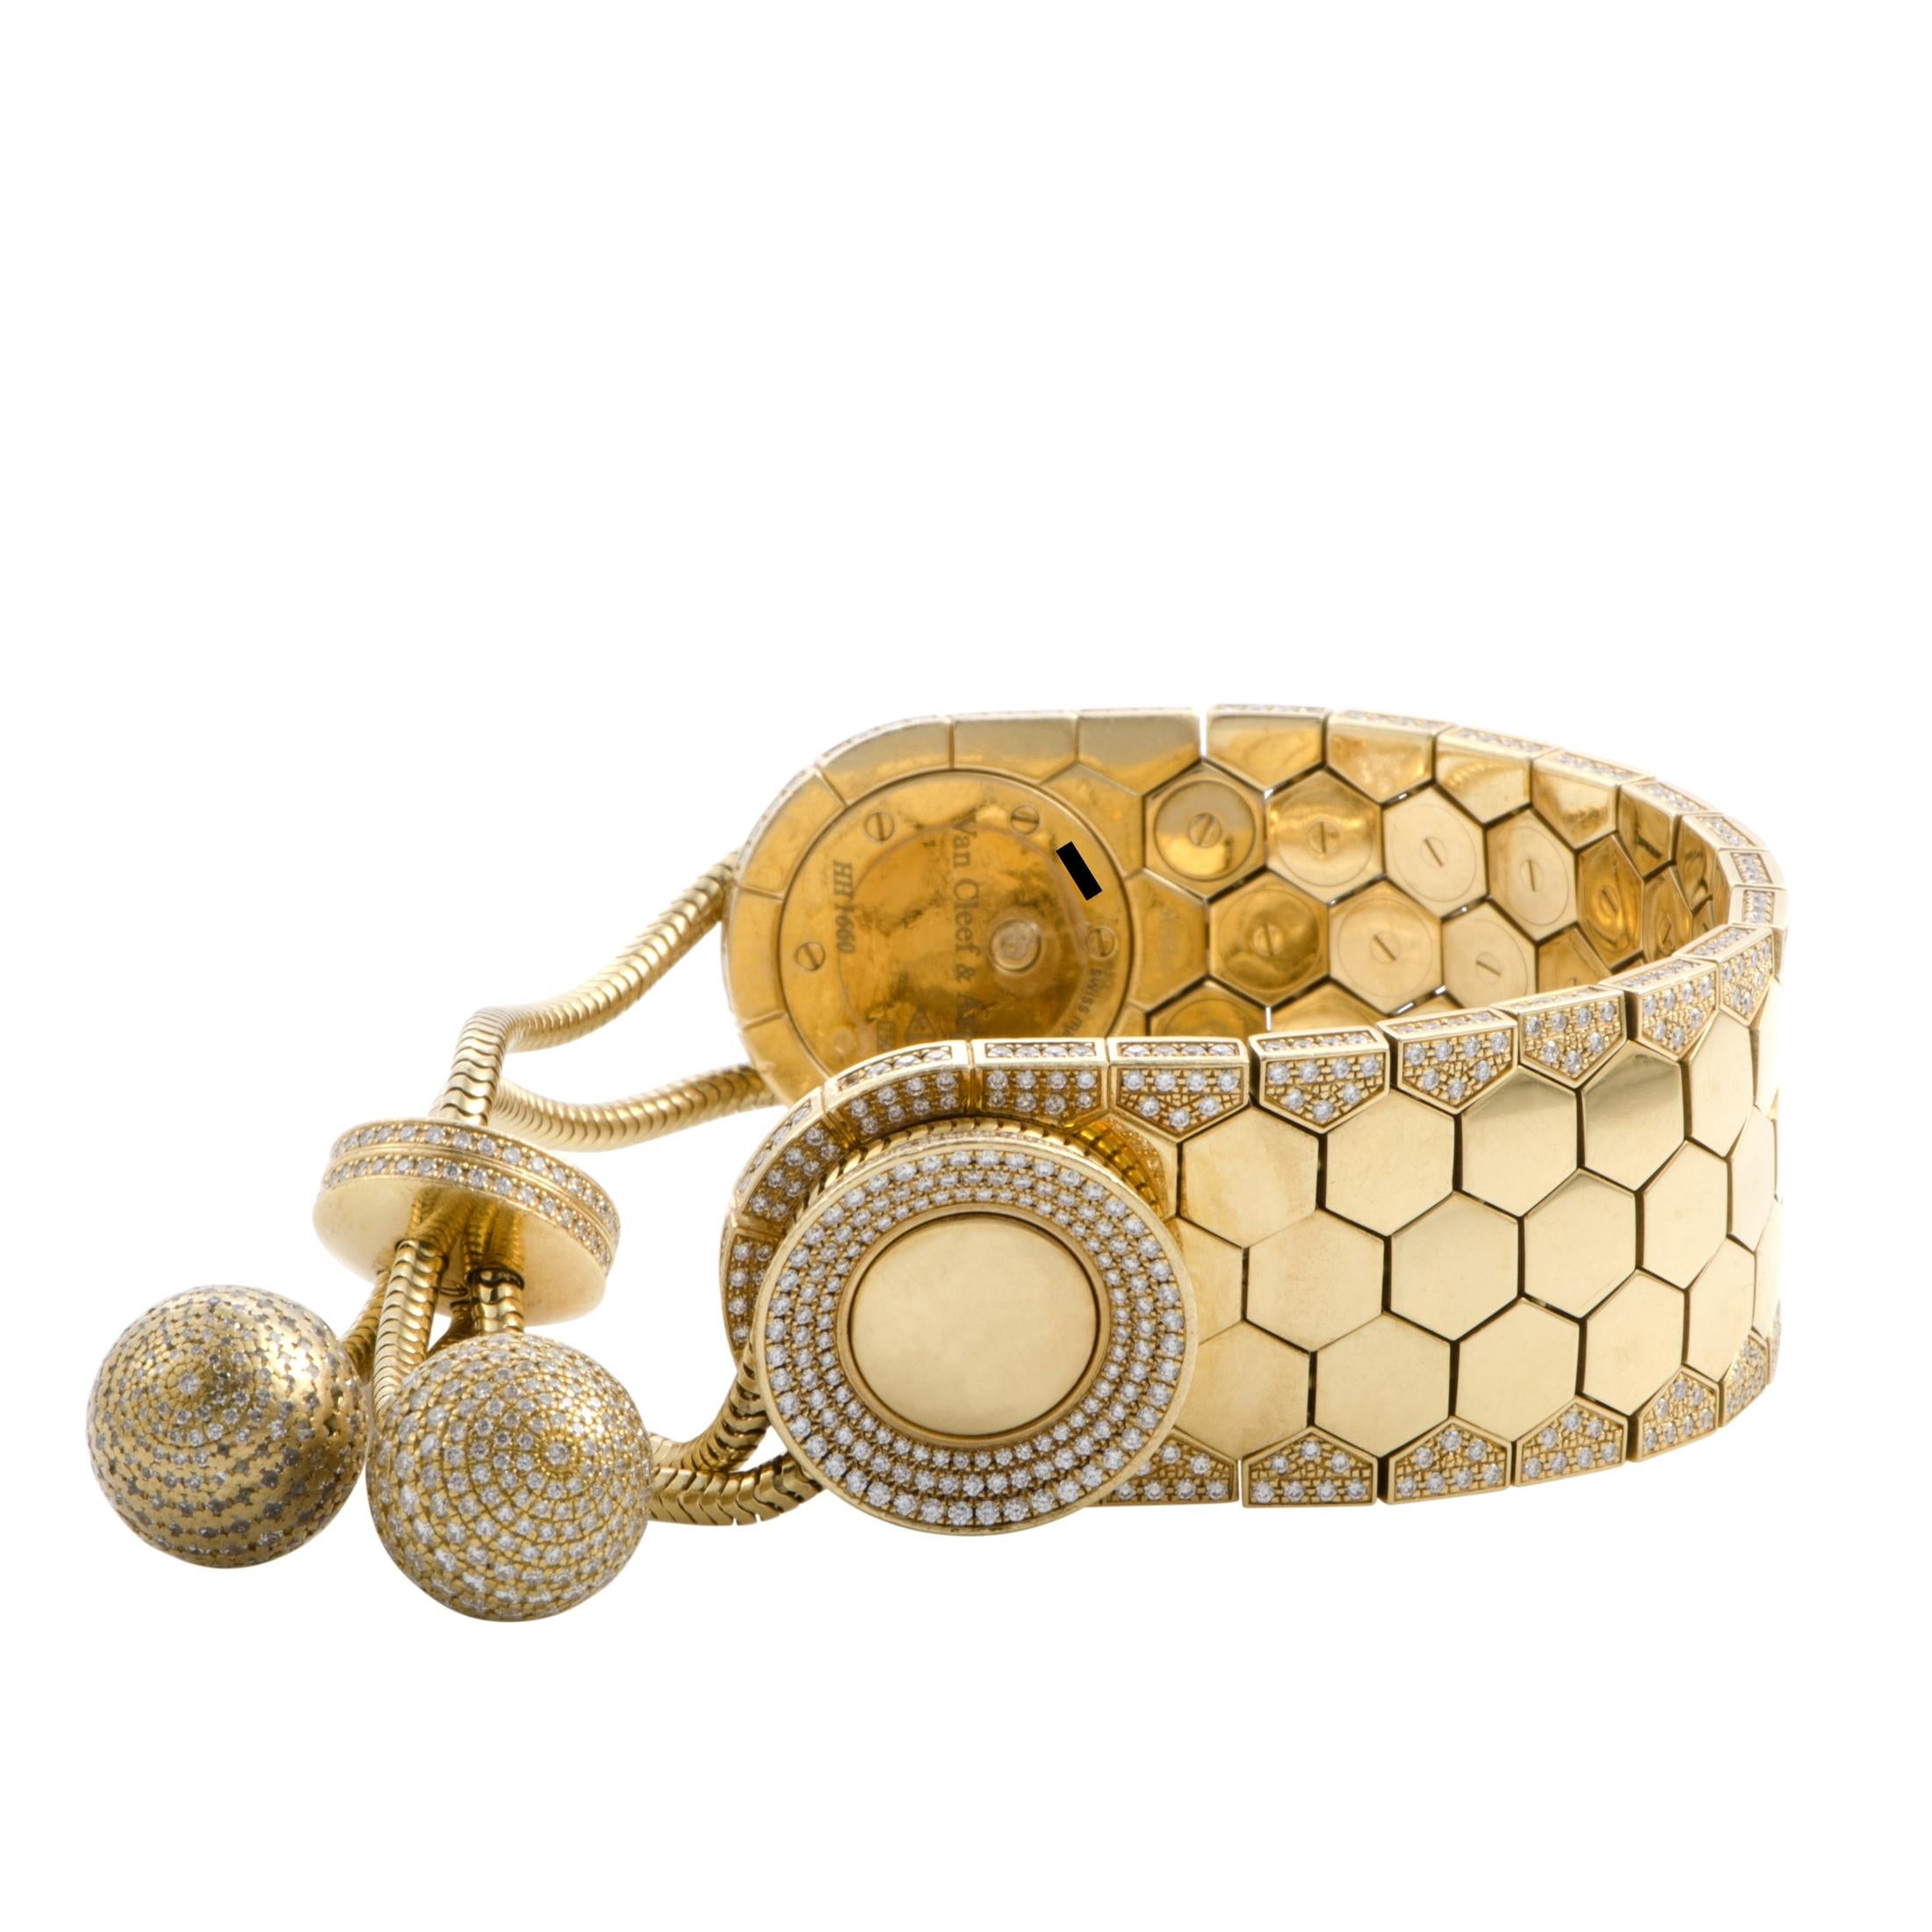 Van Cleef & Arpels 18 Karat Yellow Gold and Diamond Bracelet Watch HH1660 1